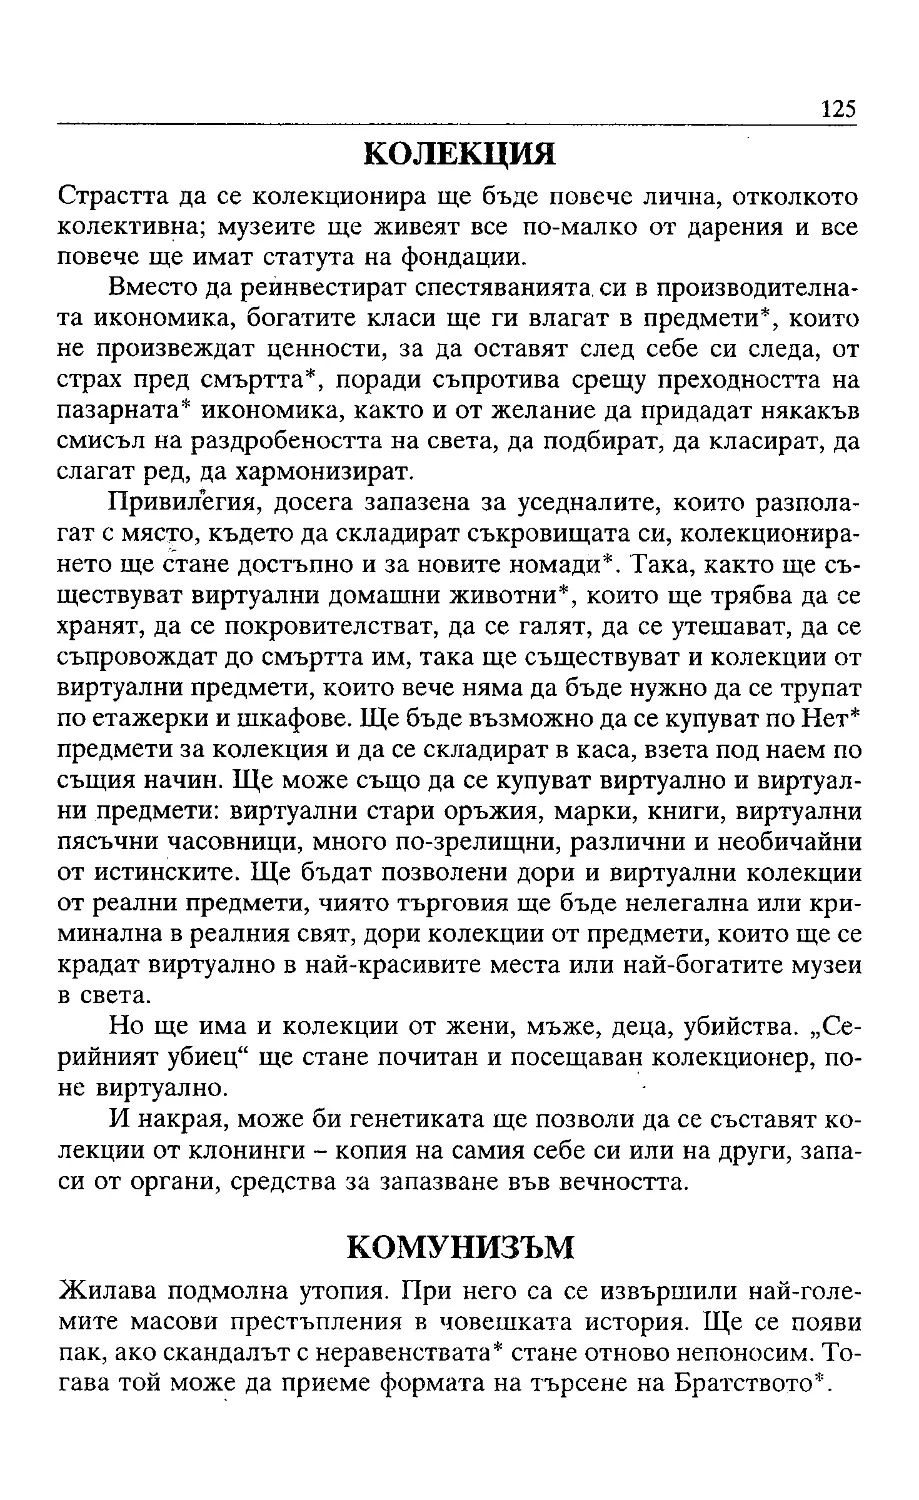 ﻿Жак Атали. Речник на 21 век_Page_061_Image_0001_2